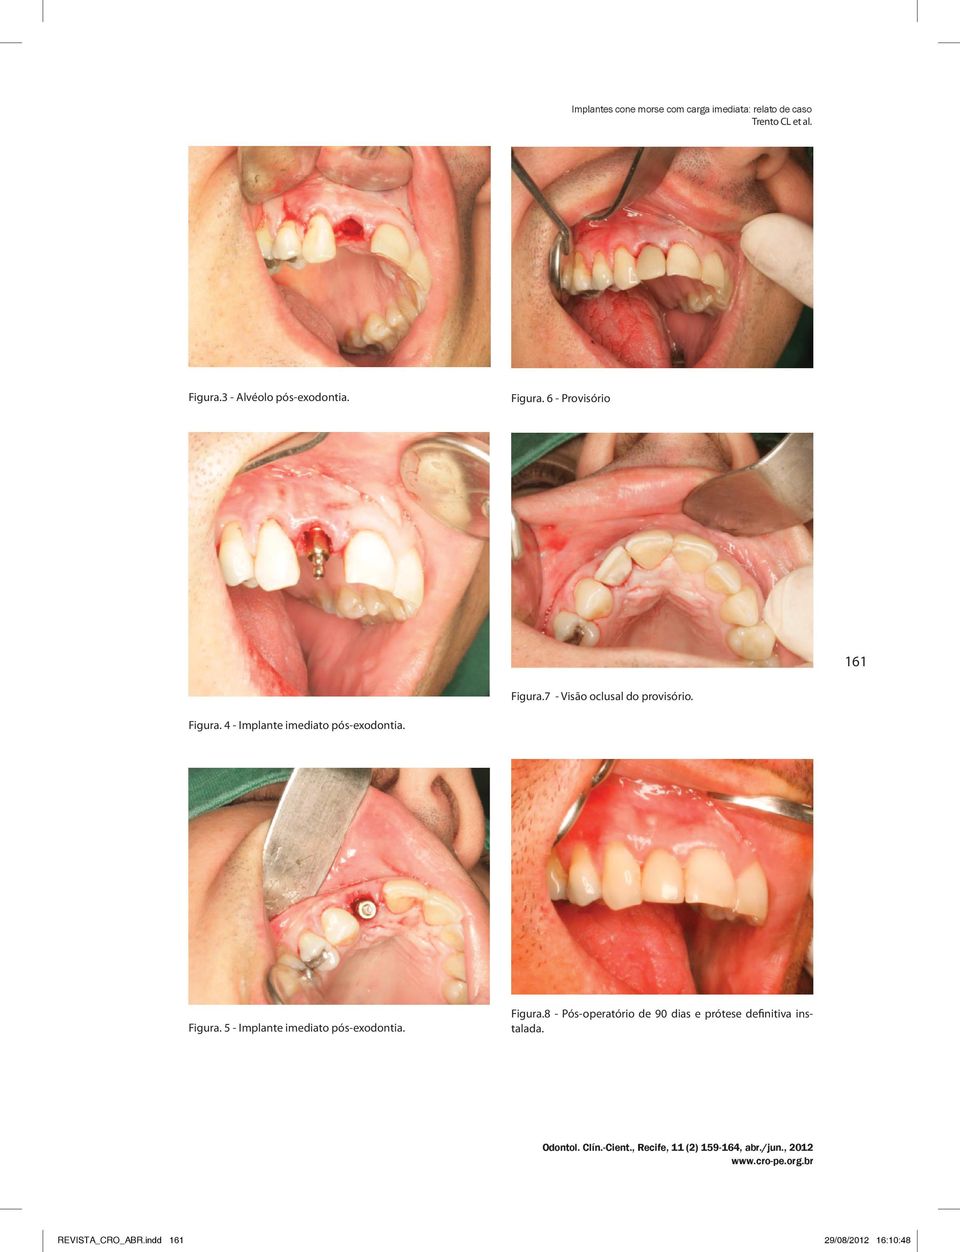 4 - Implante imediato pós-exodontia. Figura.